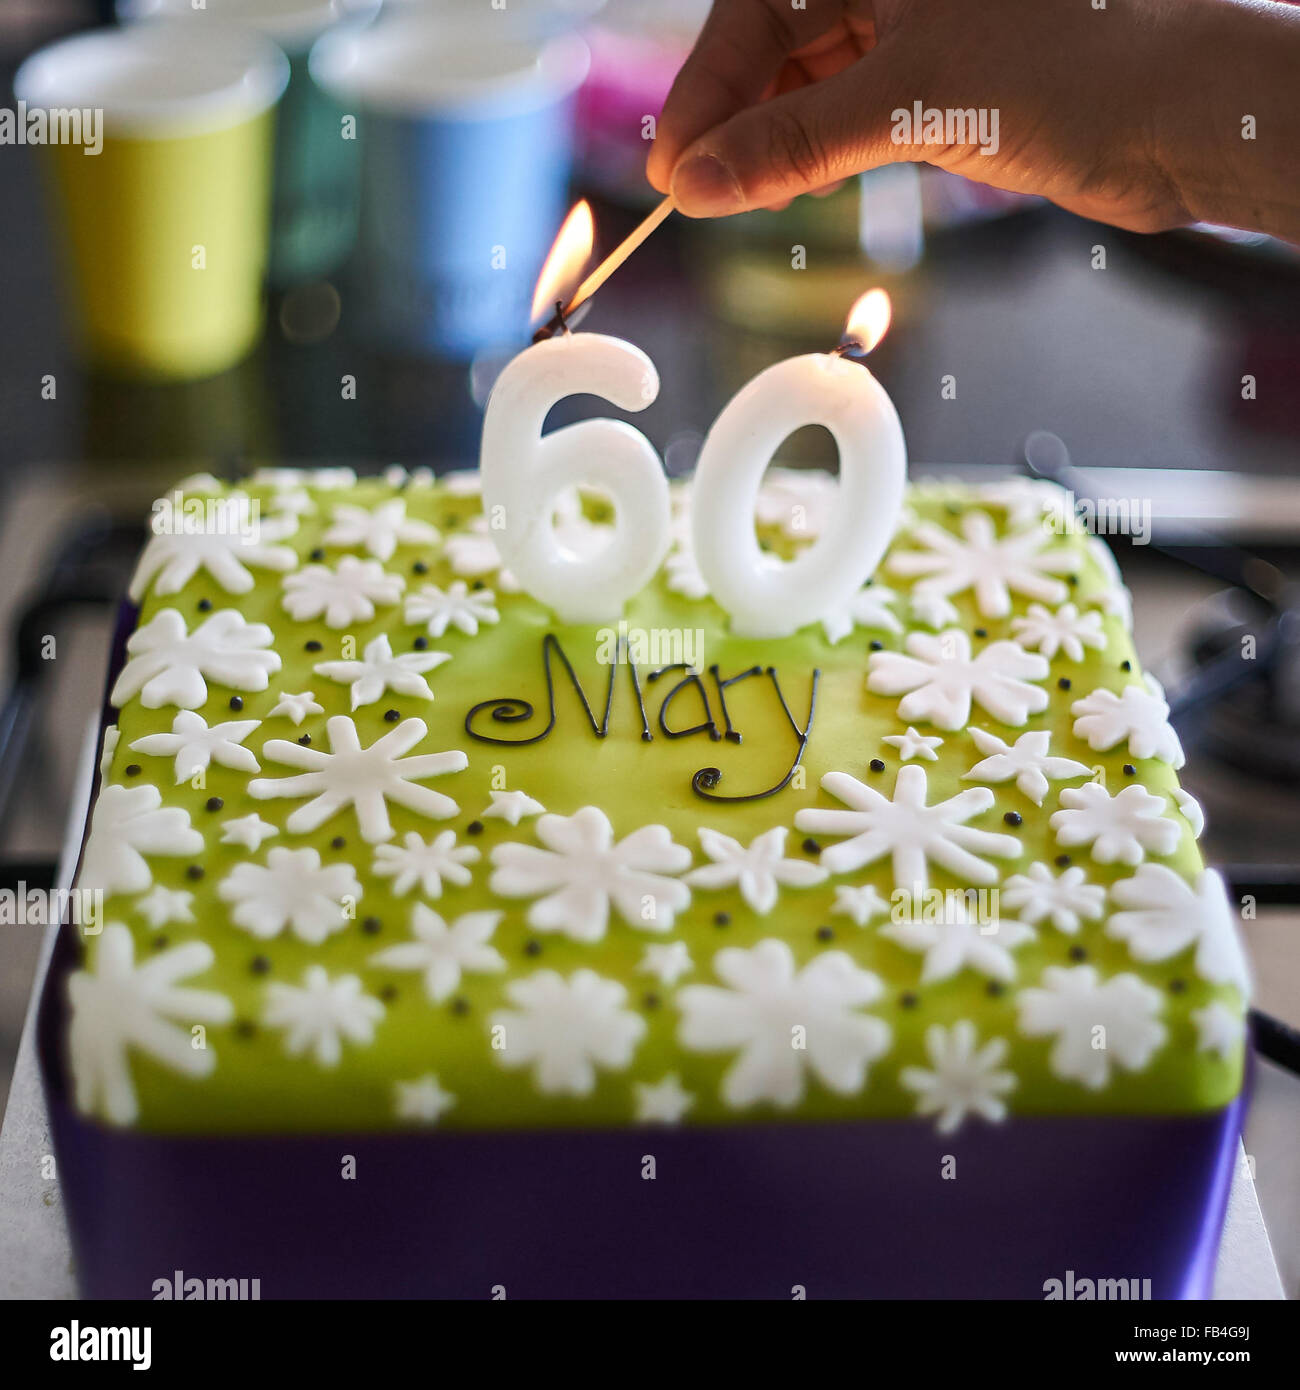 60th birthday cake Stock Photo